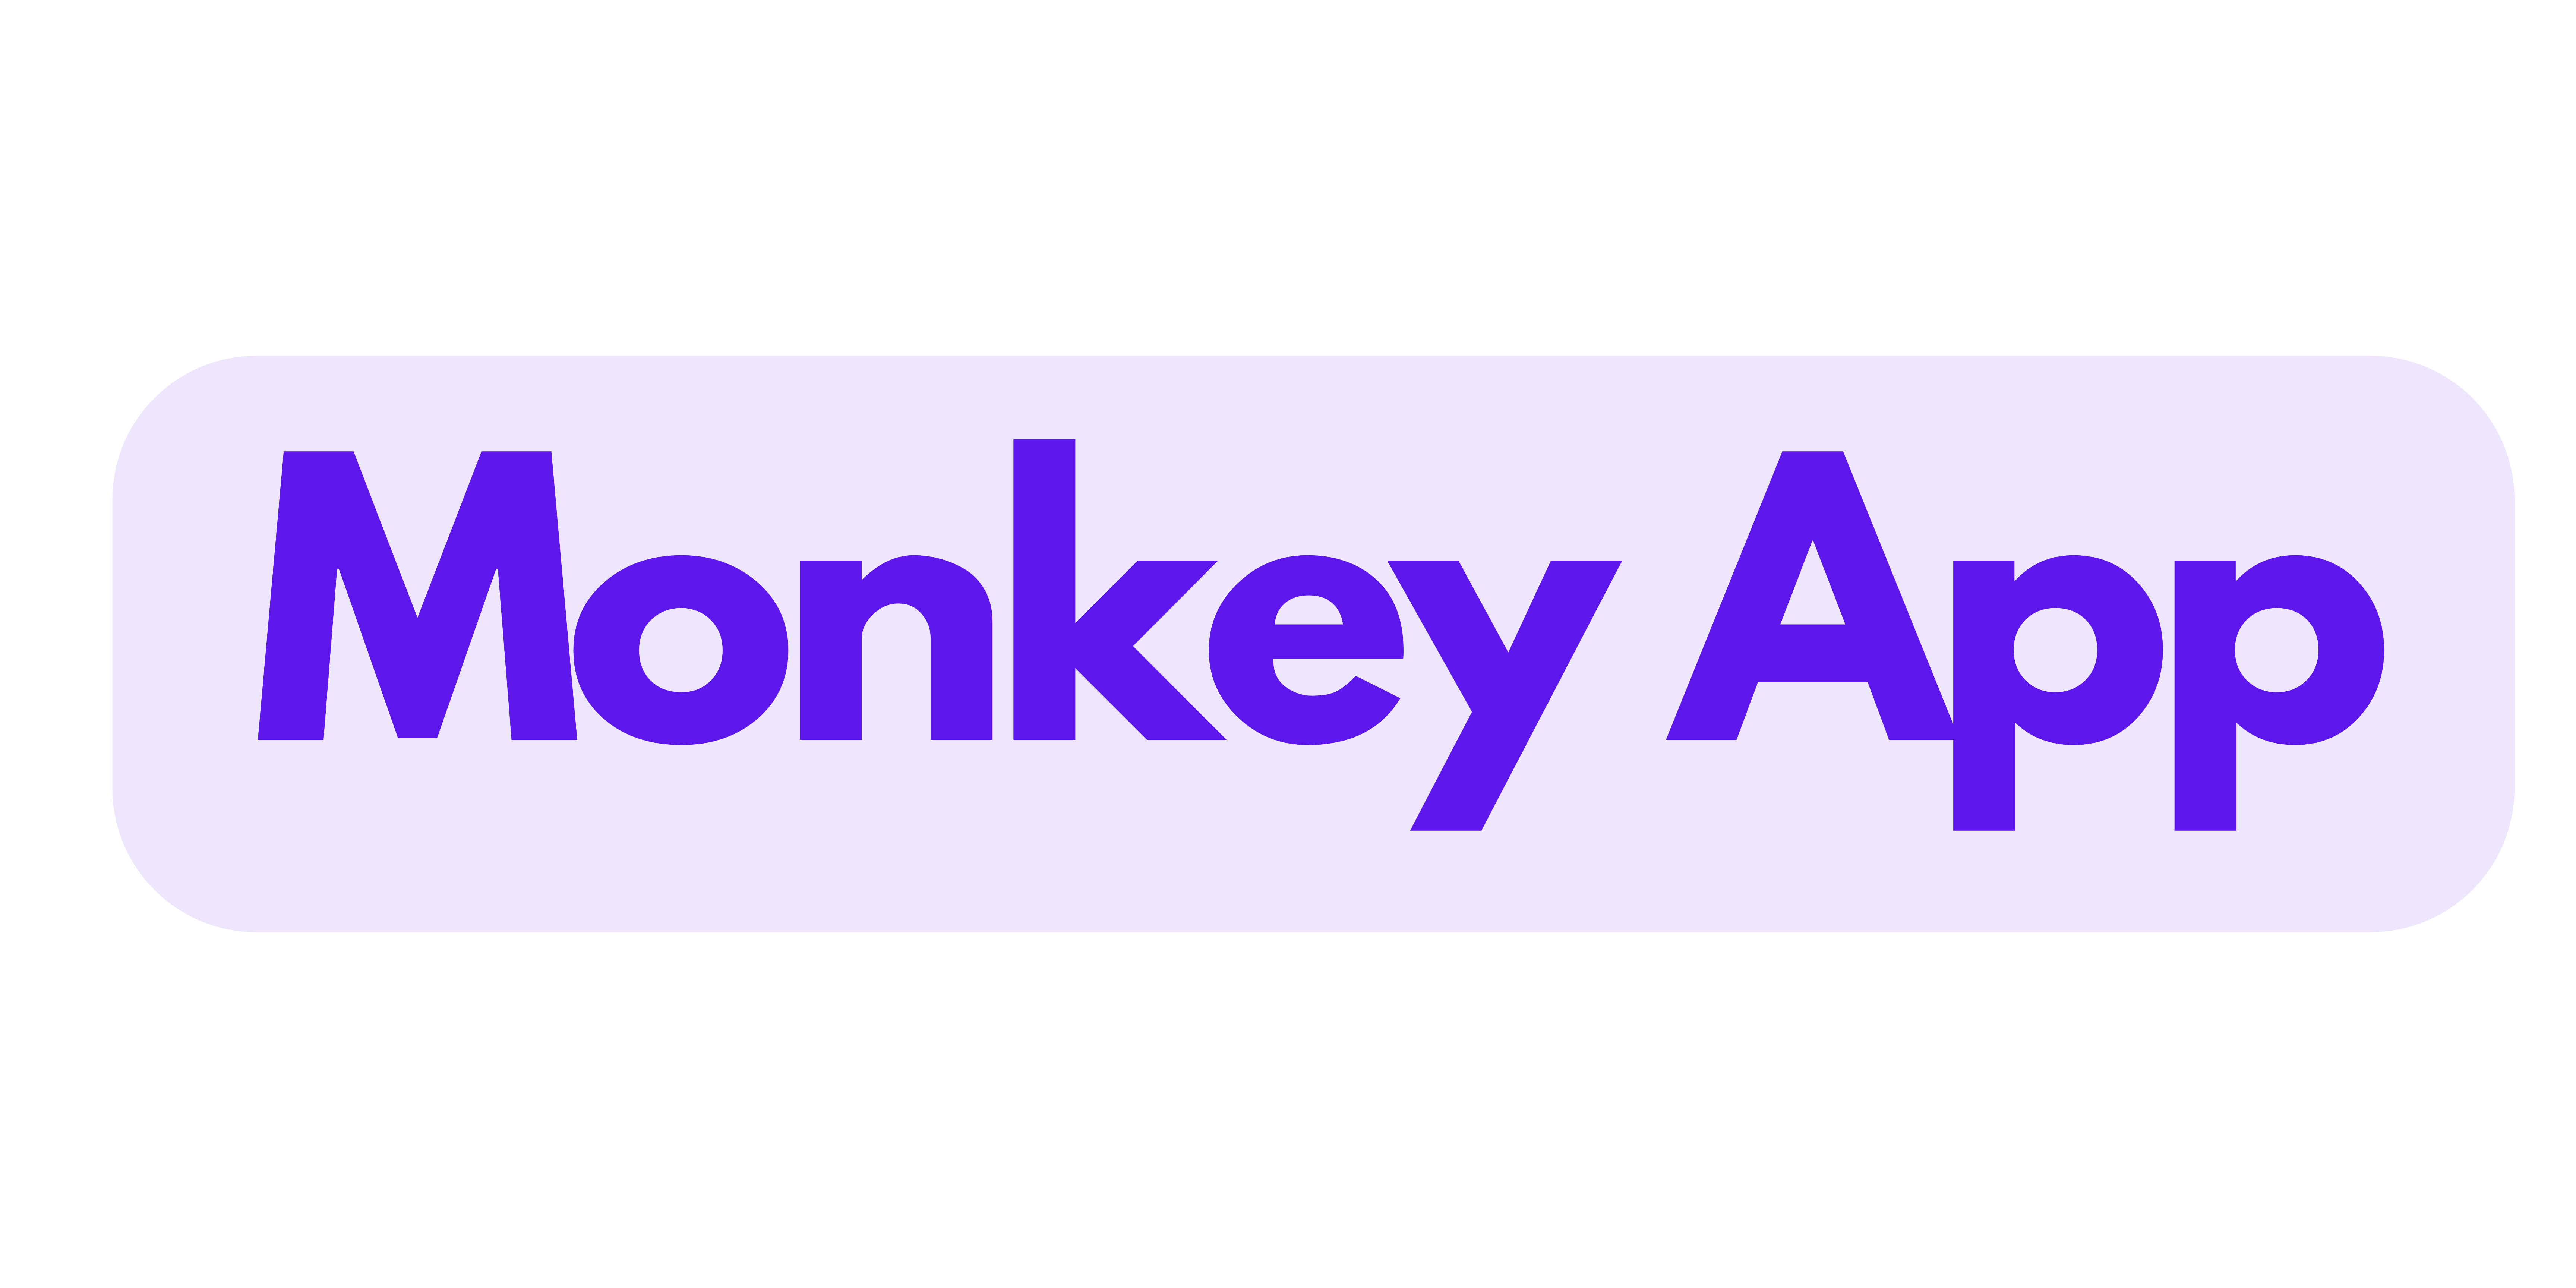 Download the Monkey app